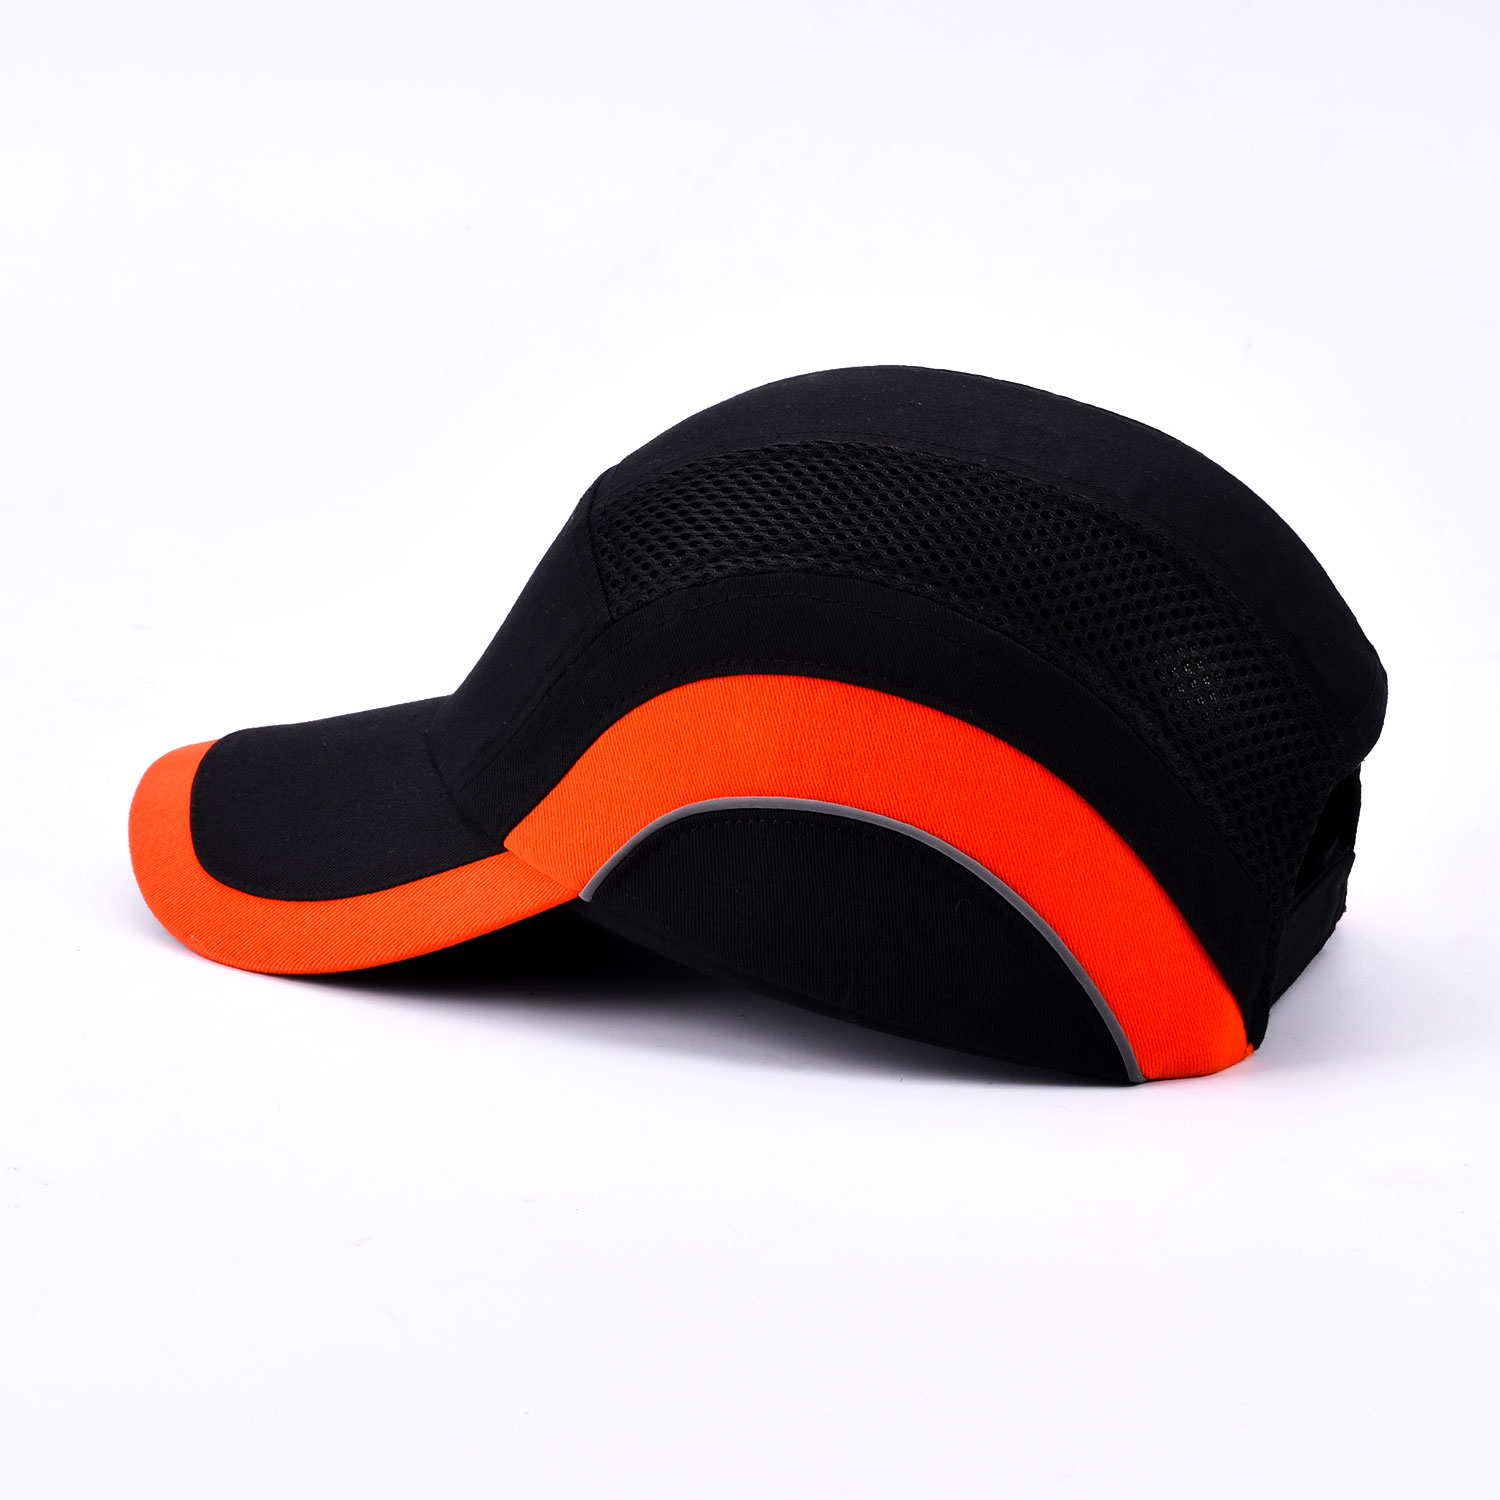 Gorra de seguridad deportiva atlética WH001 oscuro